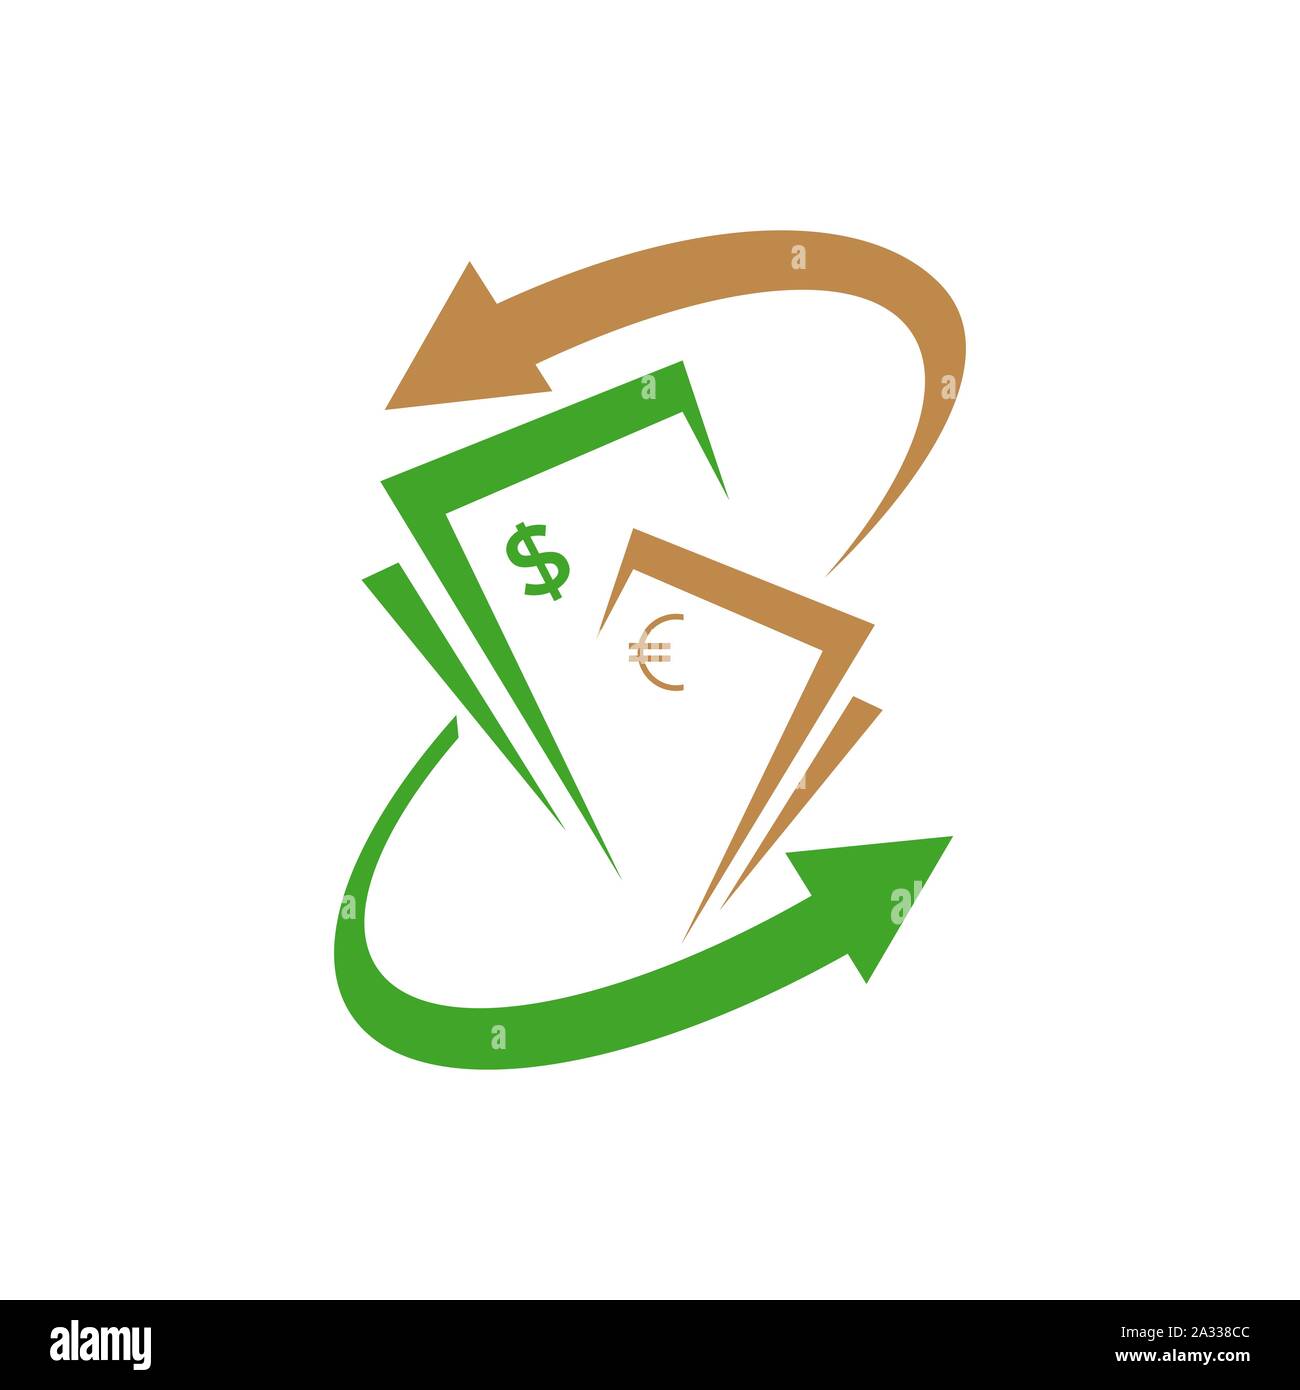 simple money transfer logo vector concept design icon illustration Stock Vector